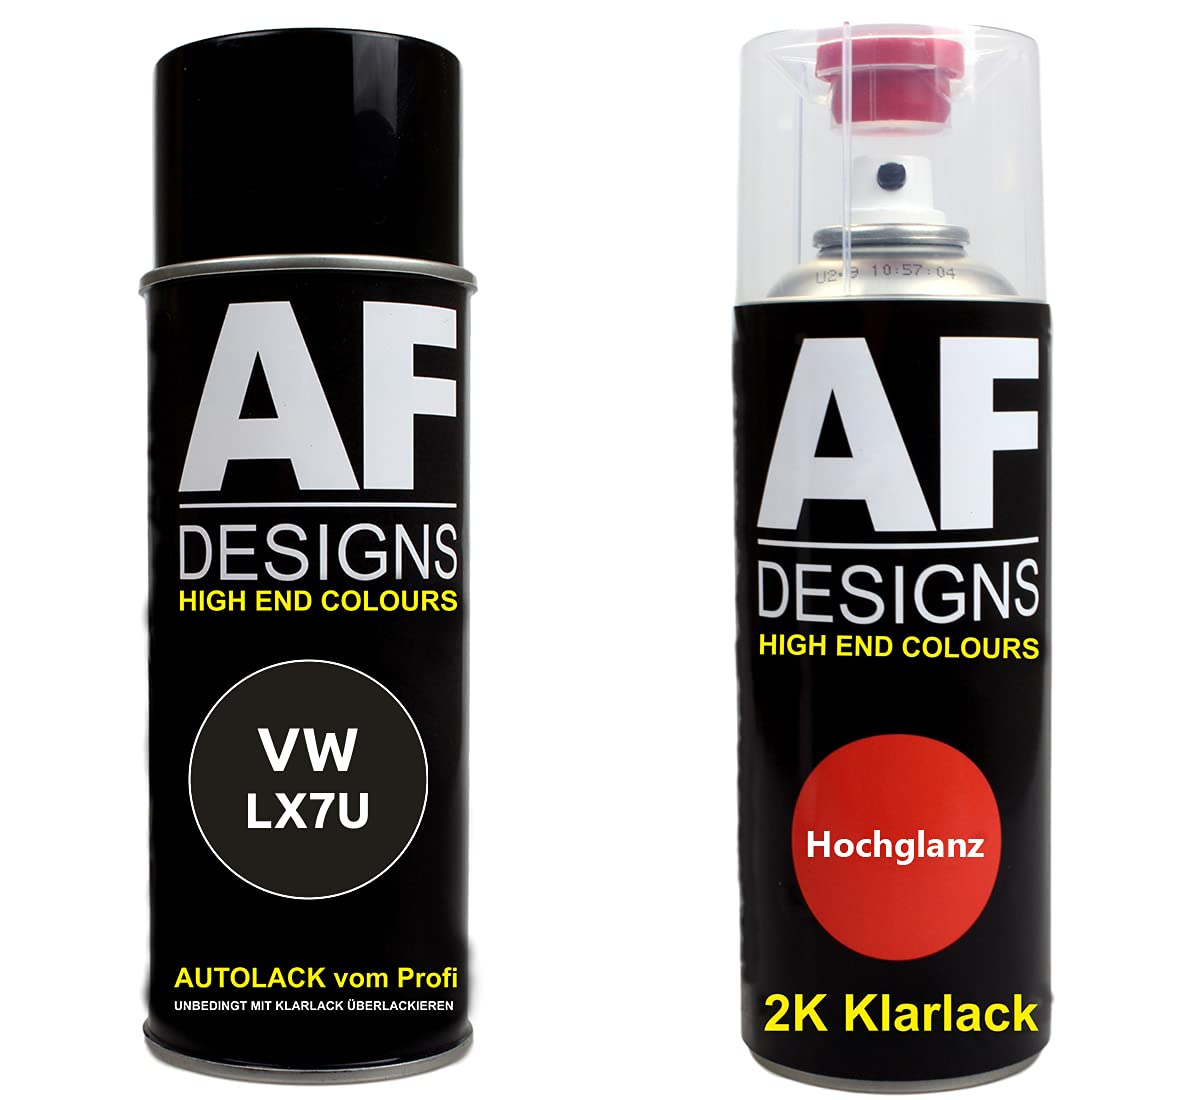 Autolack Spraydose Set für VW LX7U Oolonggrau Metallic 2K Klarlack Basislack Sprühdose Spraydosen 2x400ml von Alex Flittner Designs